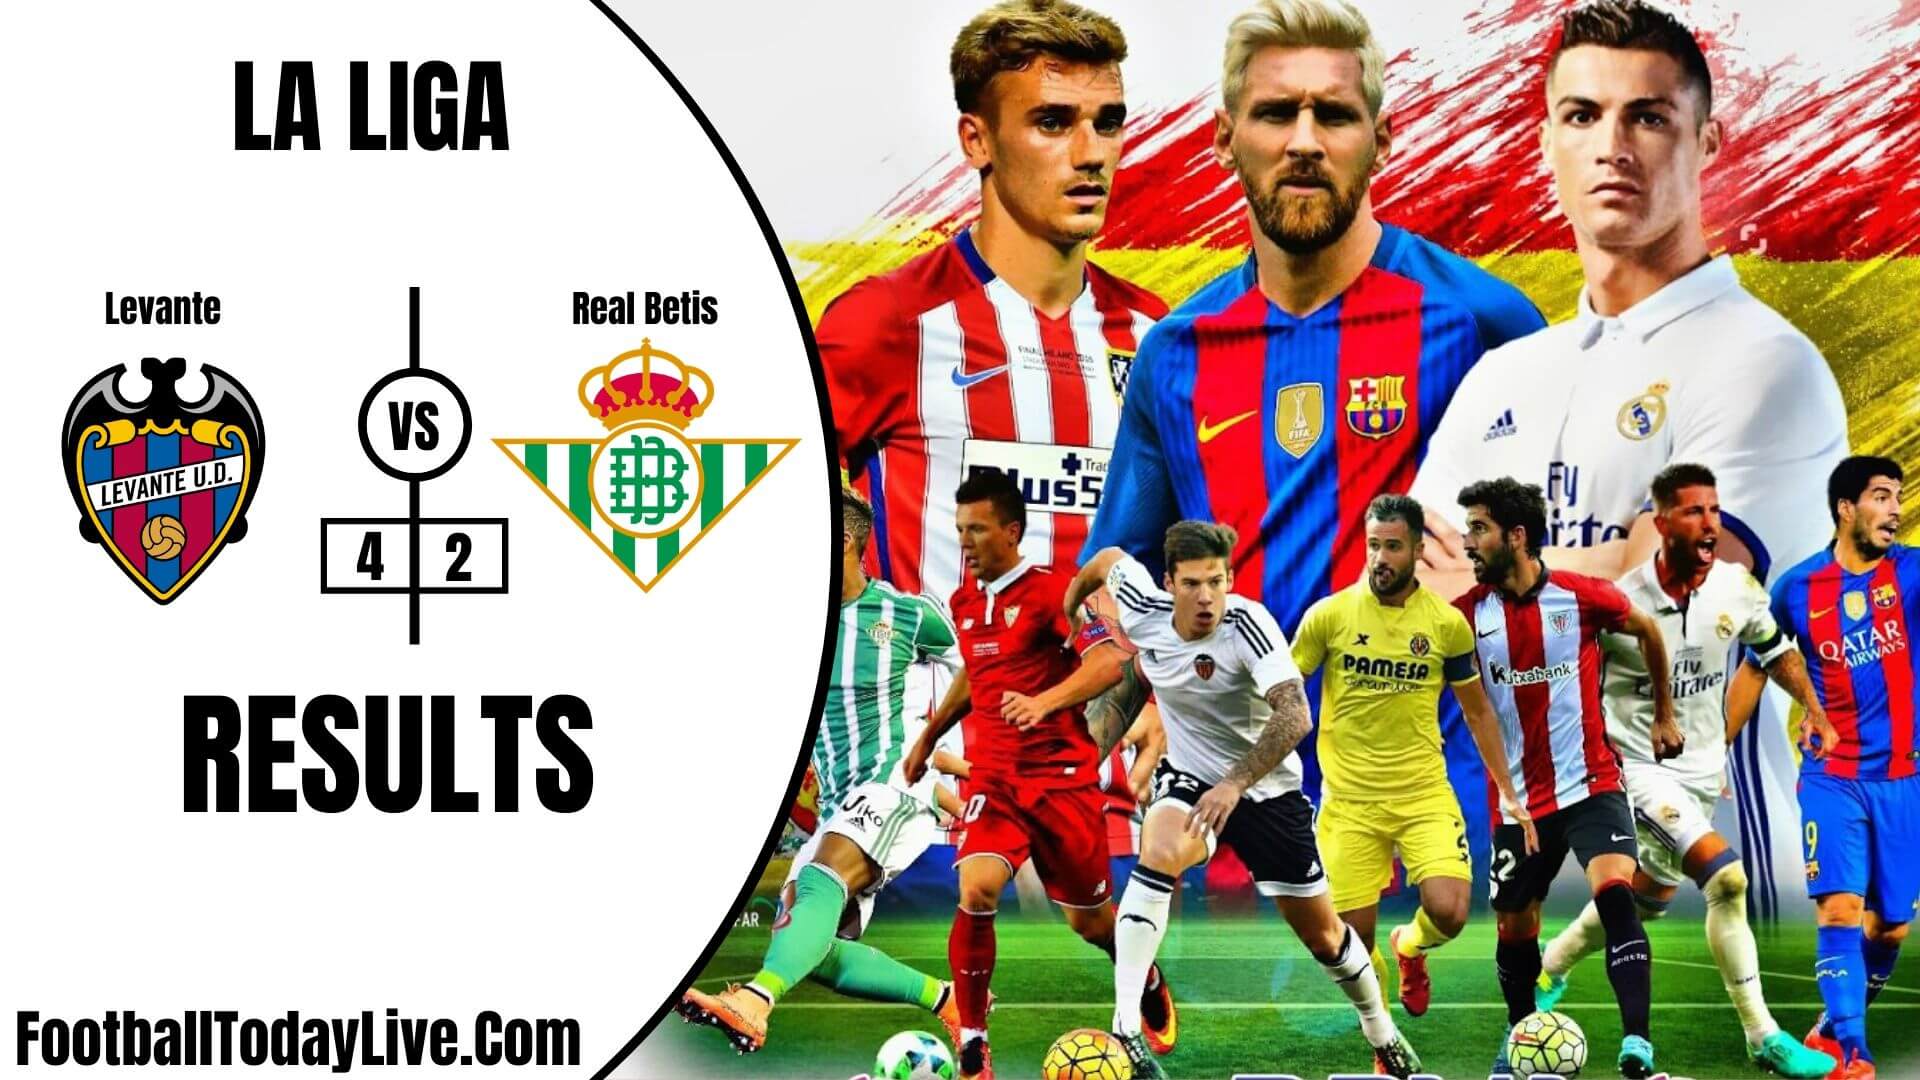 Levante Vs Real Betis | La Liga Week 32 Result 2020